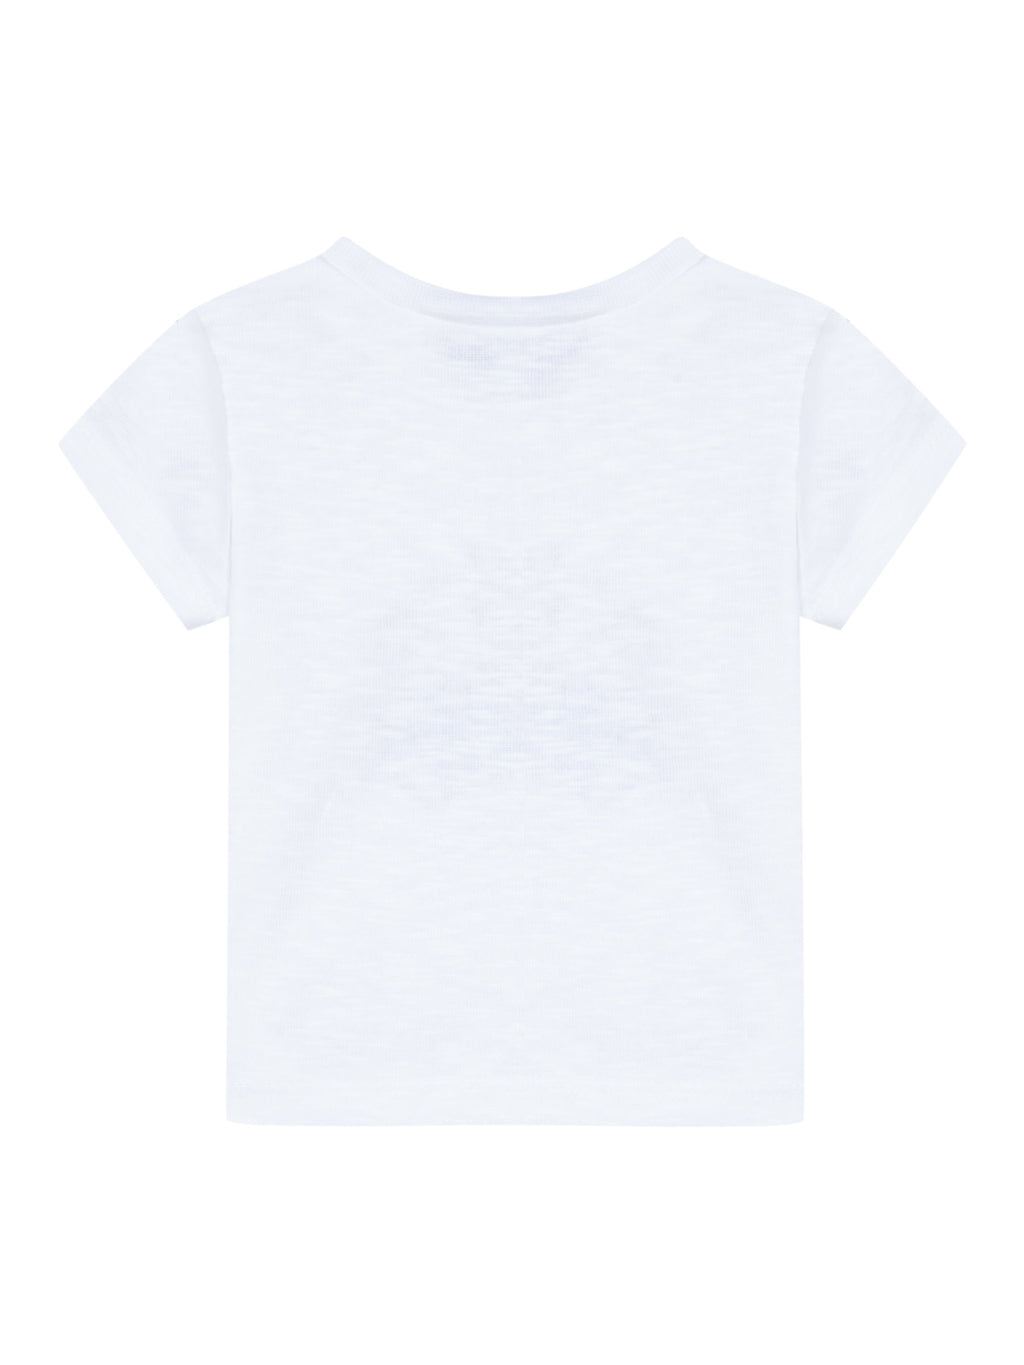 Camiseta - Algodón Blanco camioneta